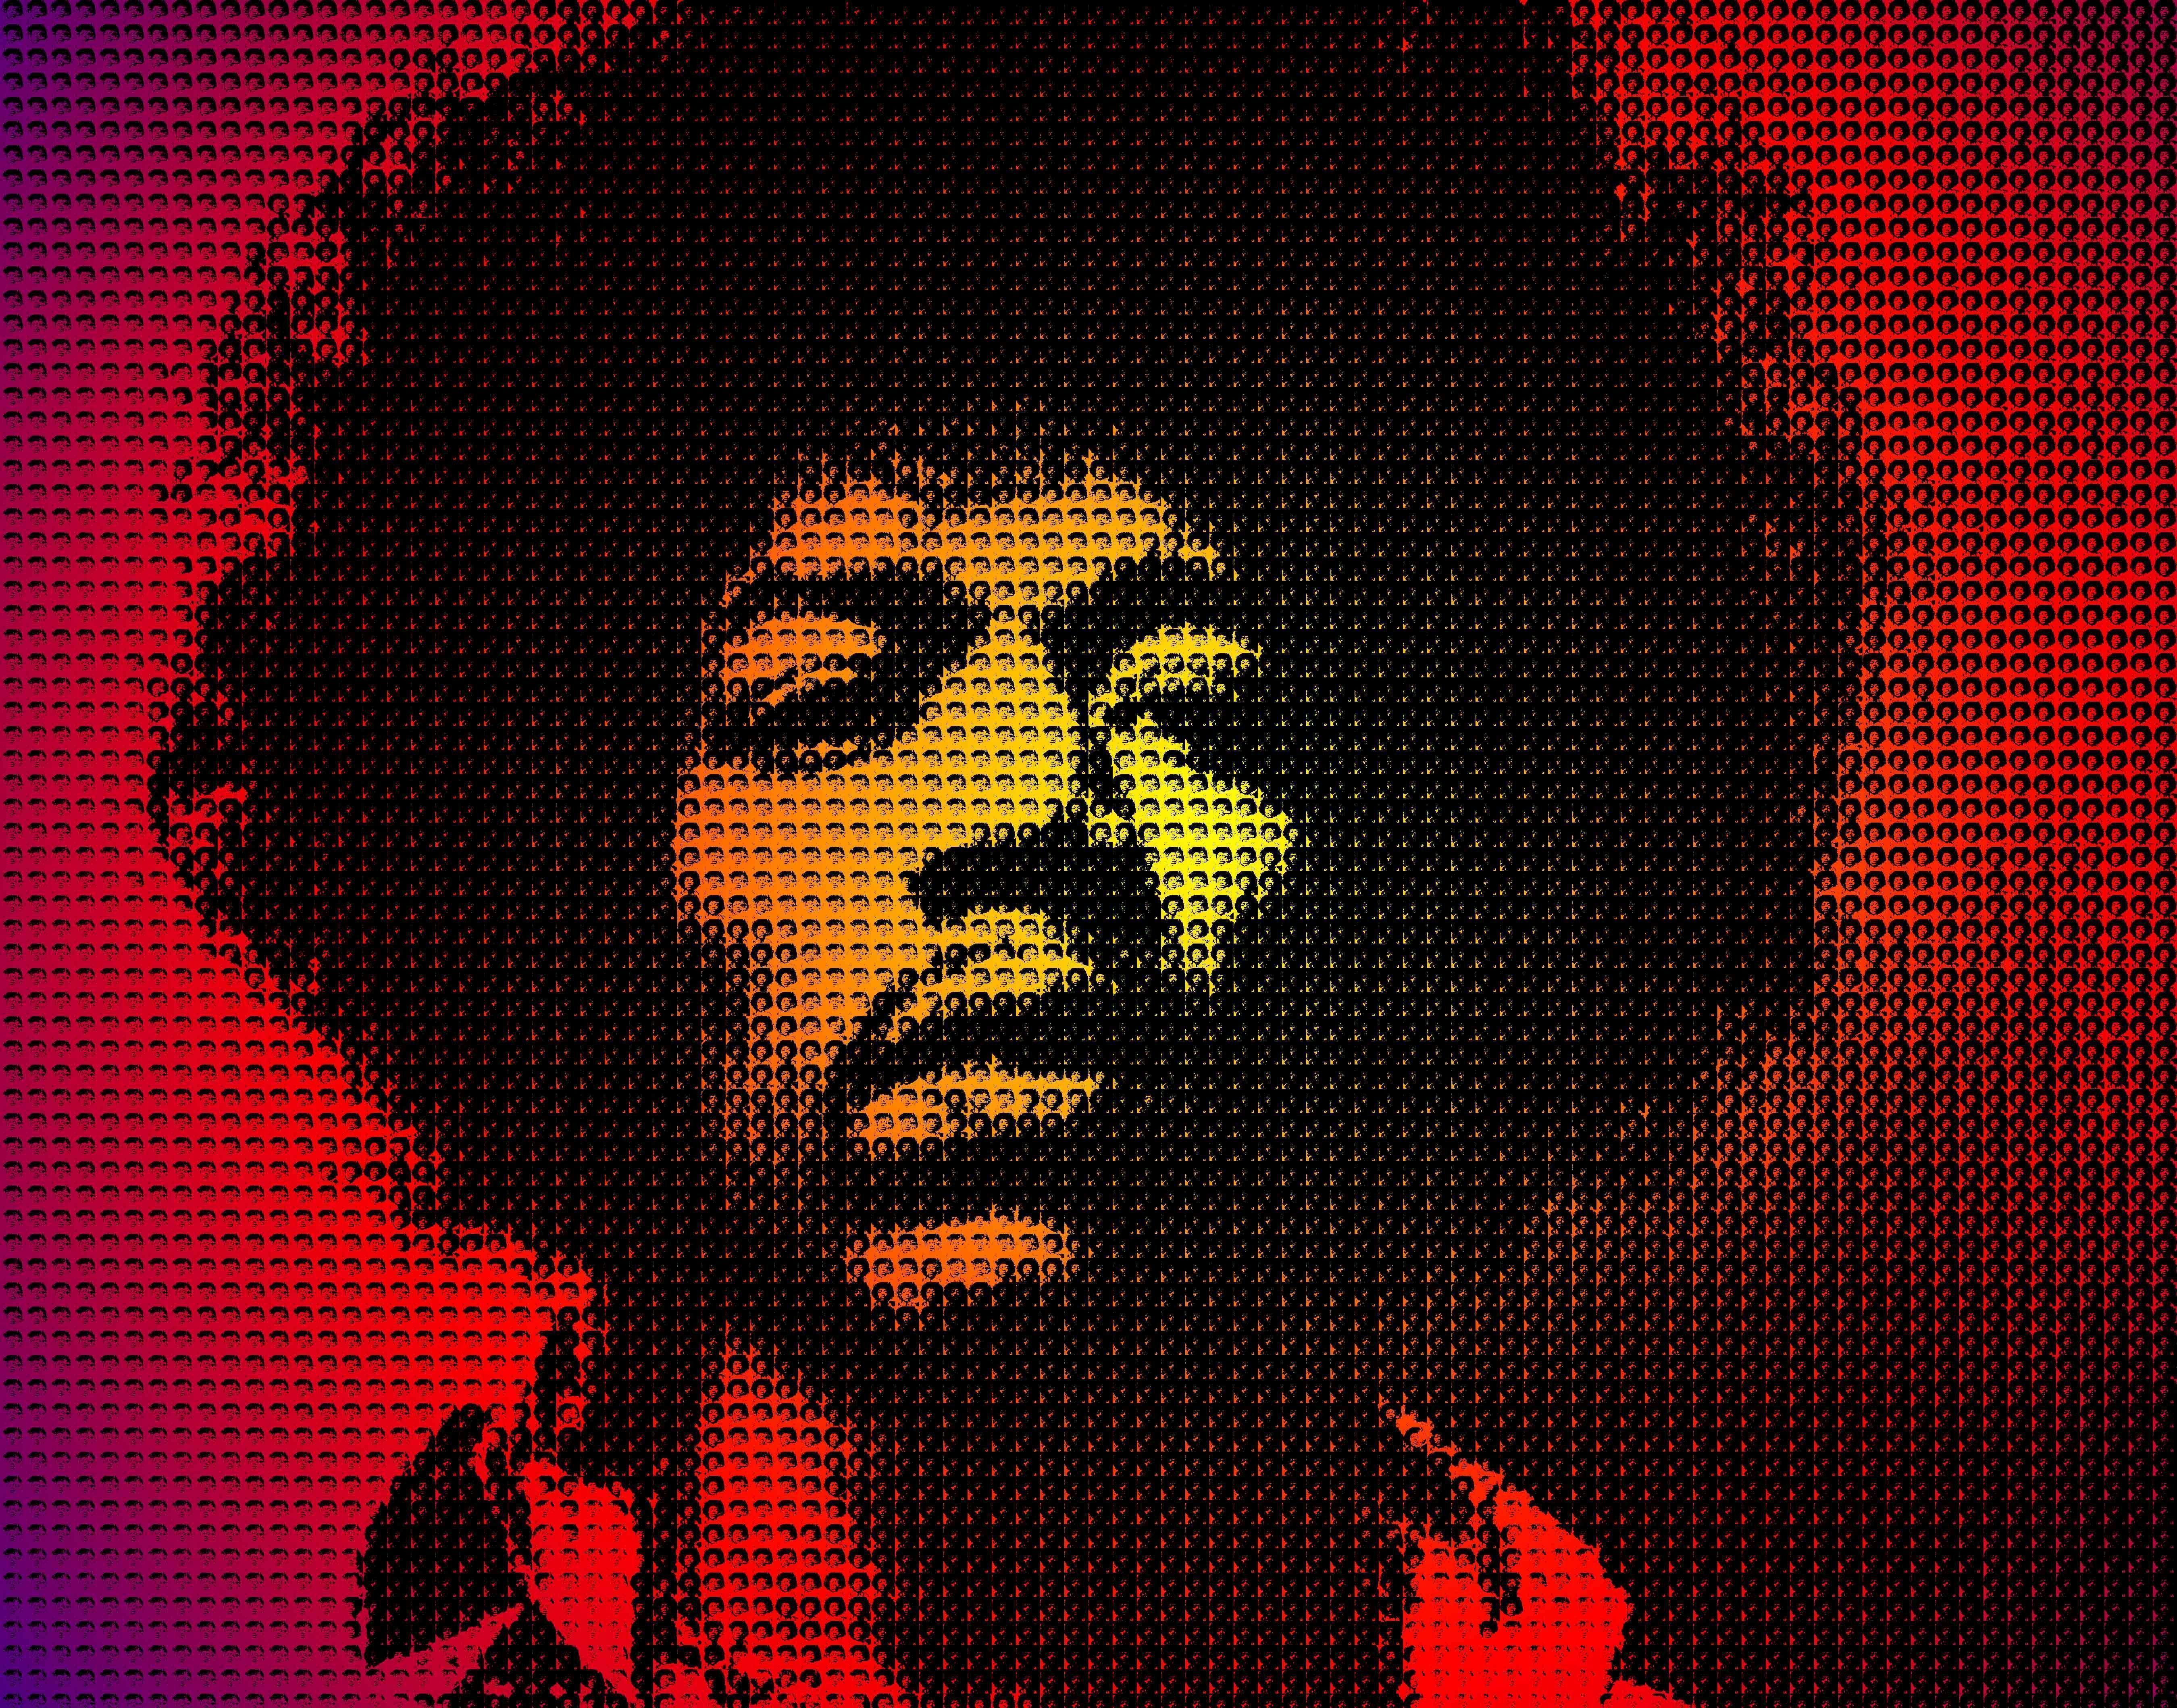 Jimi Hendrix Wallpaper Image Photo Picture Background